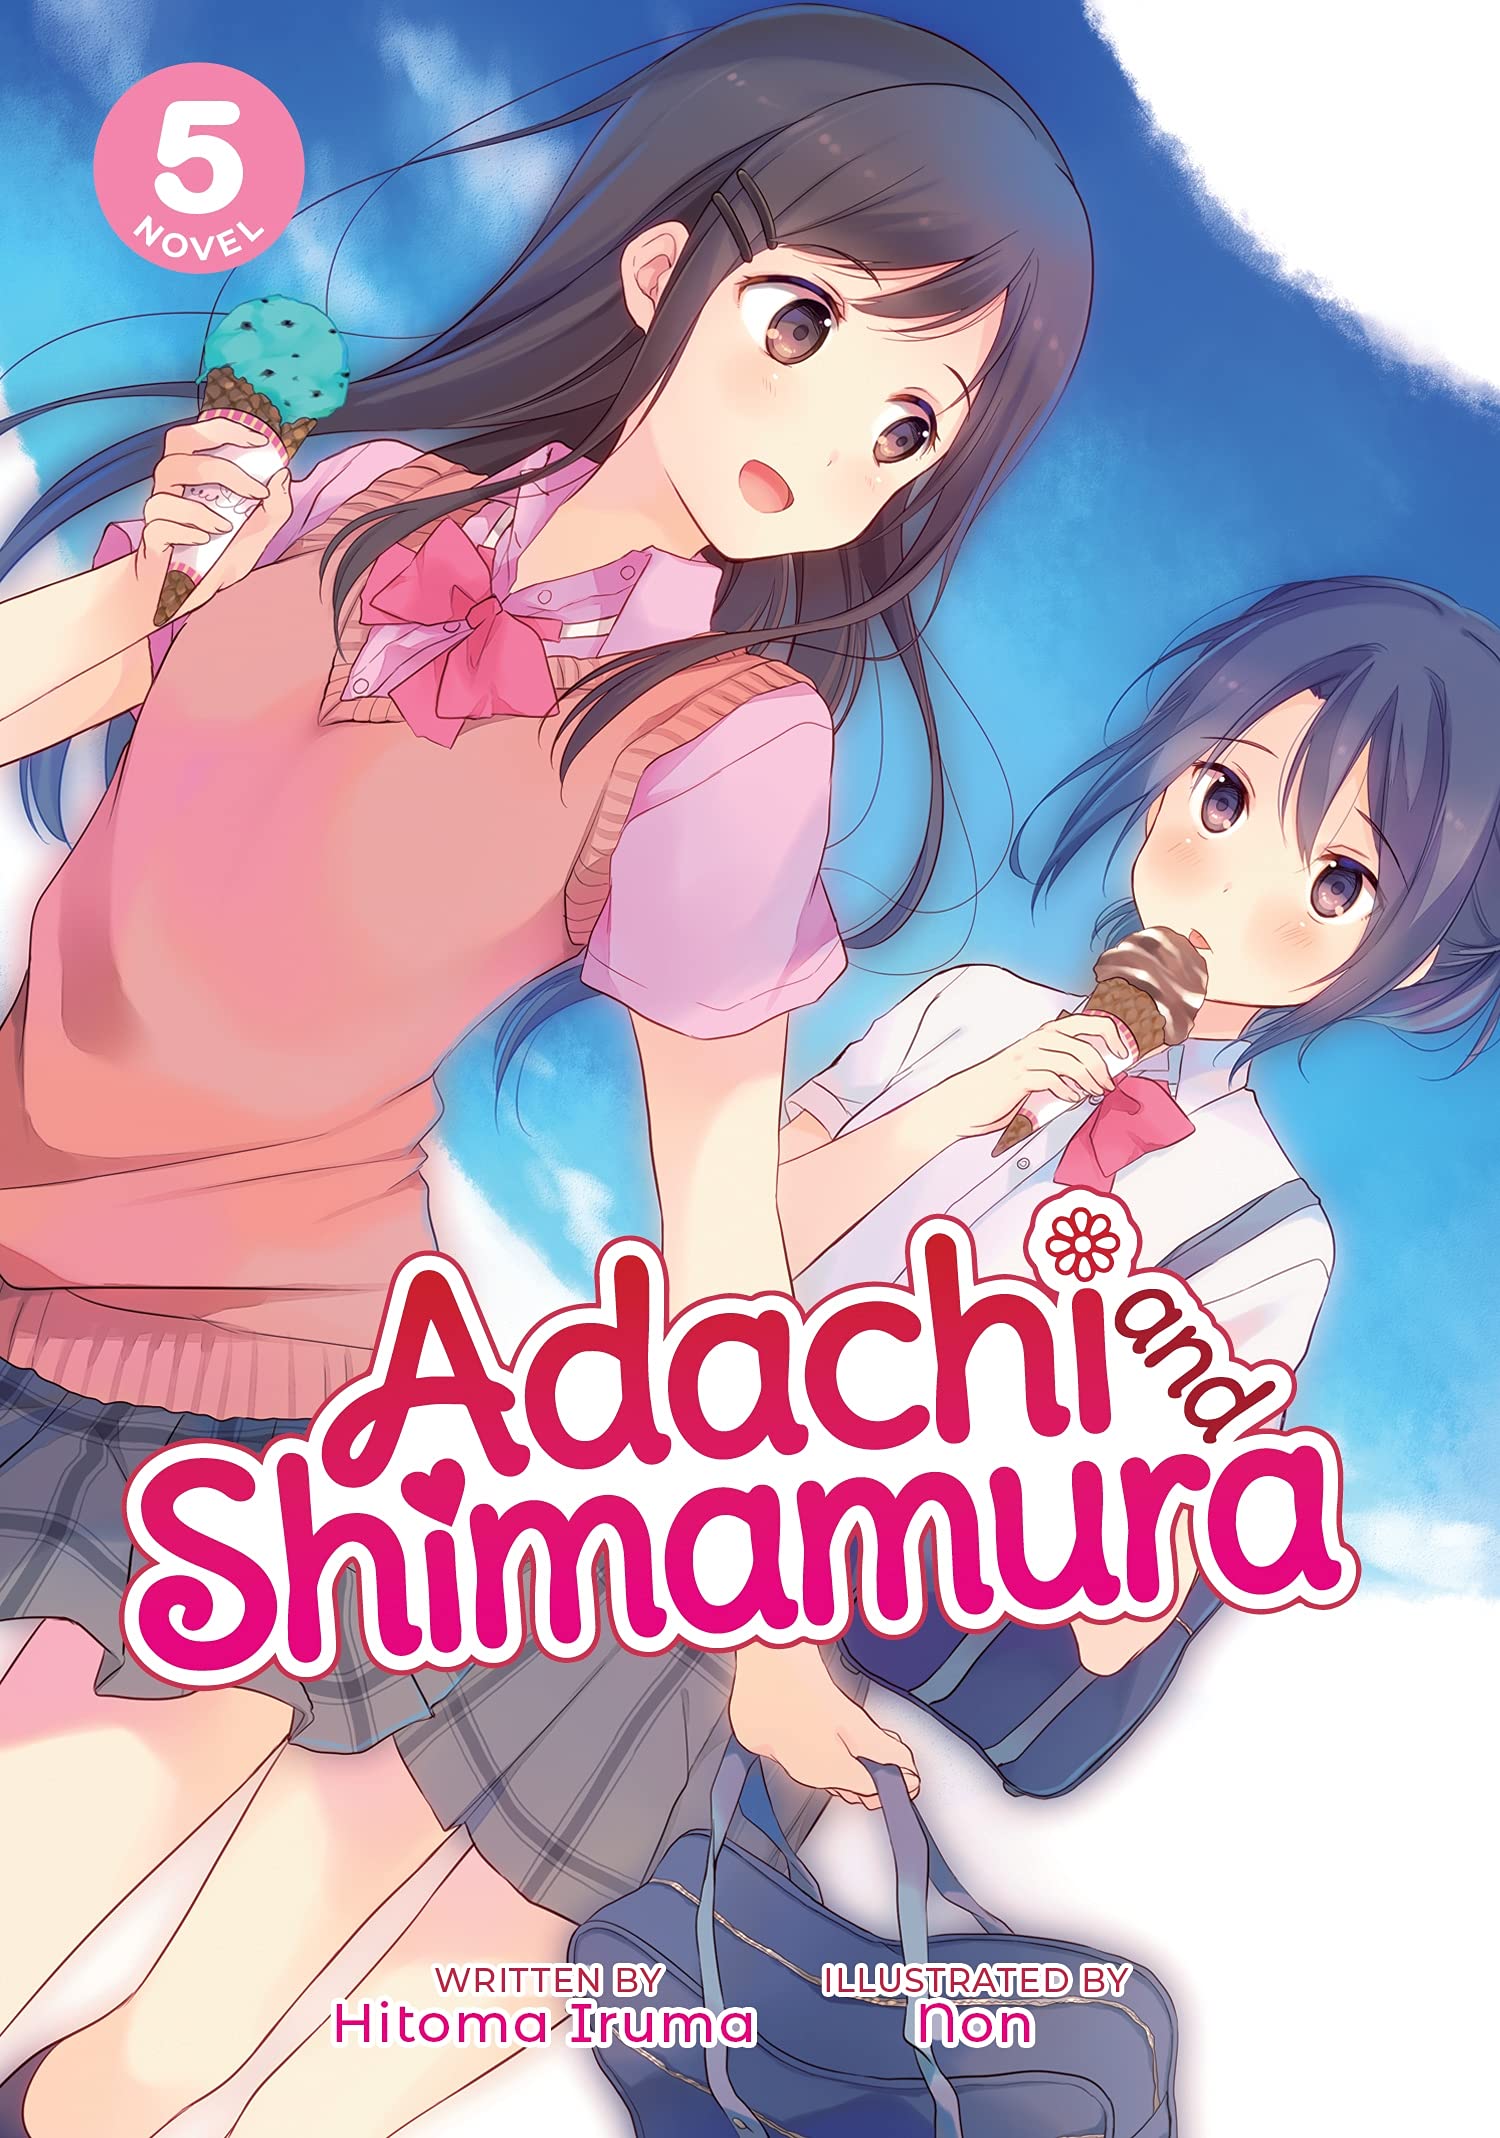 Adachi and Shimamura Vol. 4 by Hitomi Iruma / NEW Yuri manga from Seven Seas